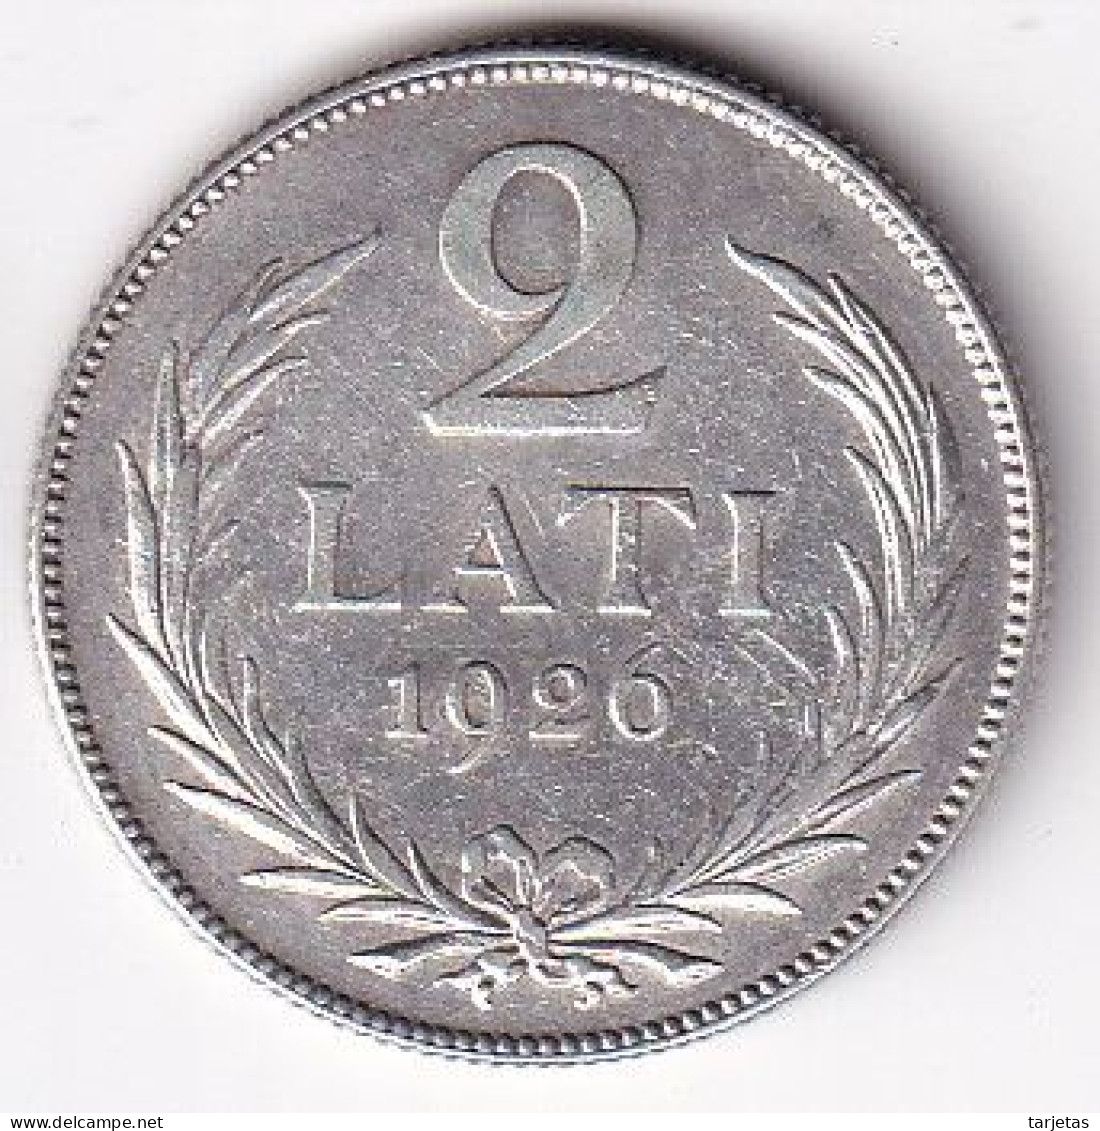 MONEDA DE PLATA DE LETONIA DE 2 LATI DEL AÑO 1926  (COIN) SILVER-ARGENT - Lettonia